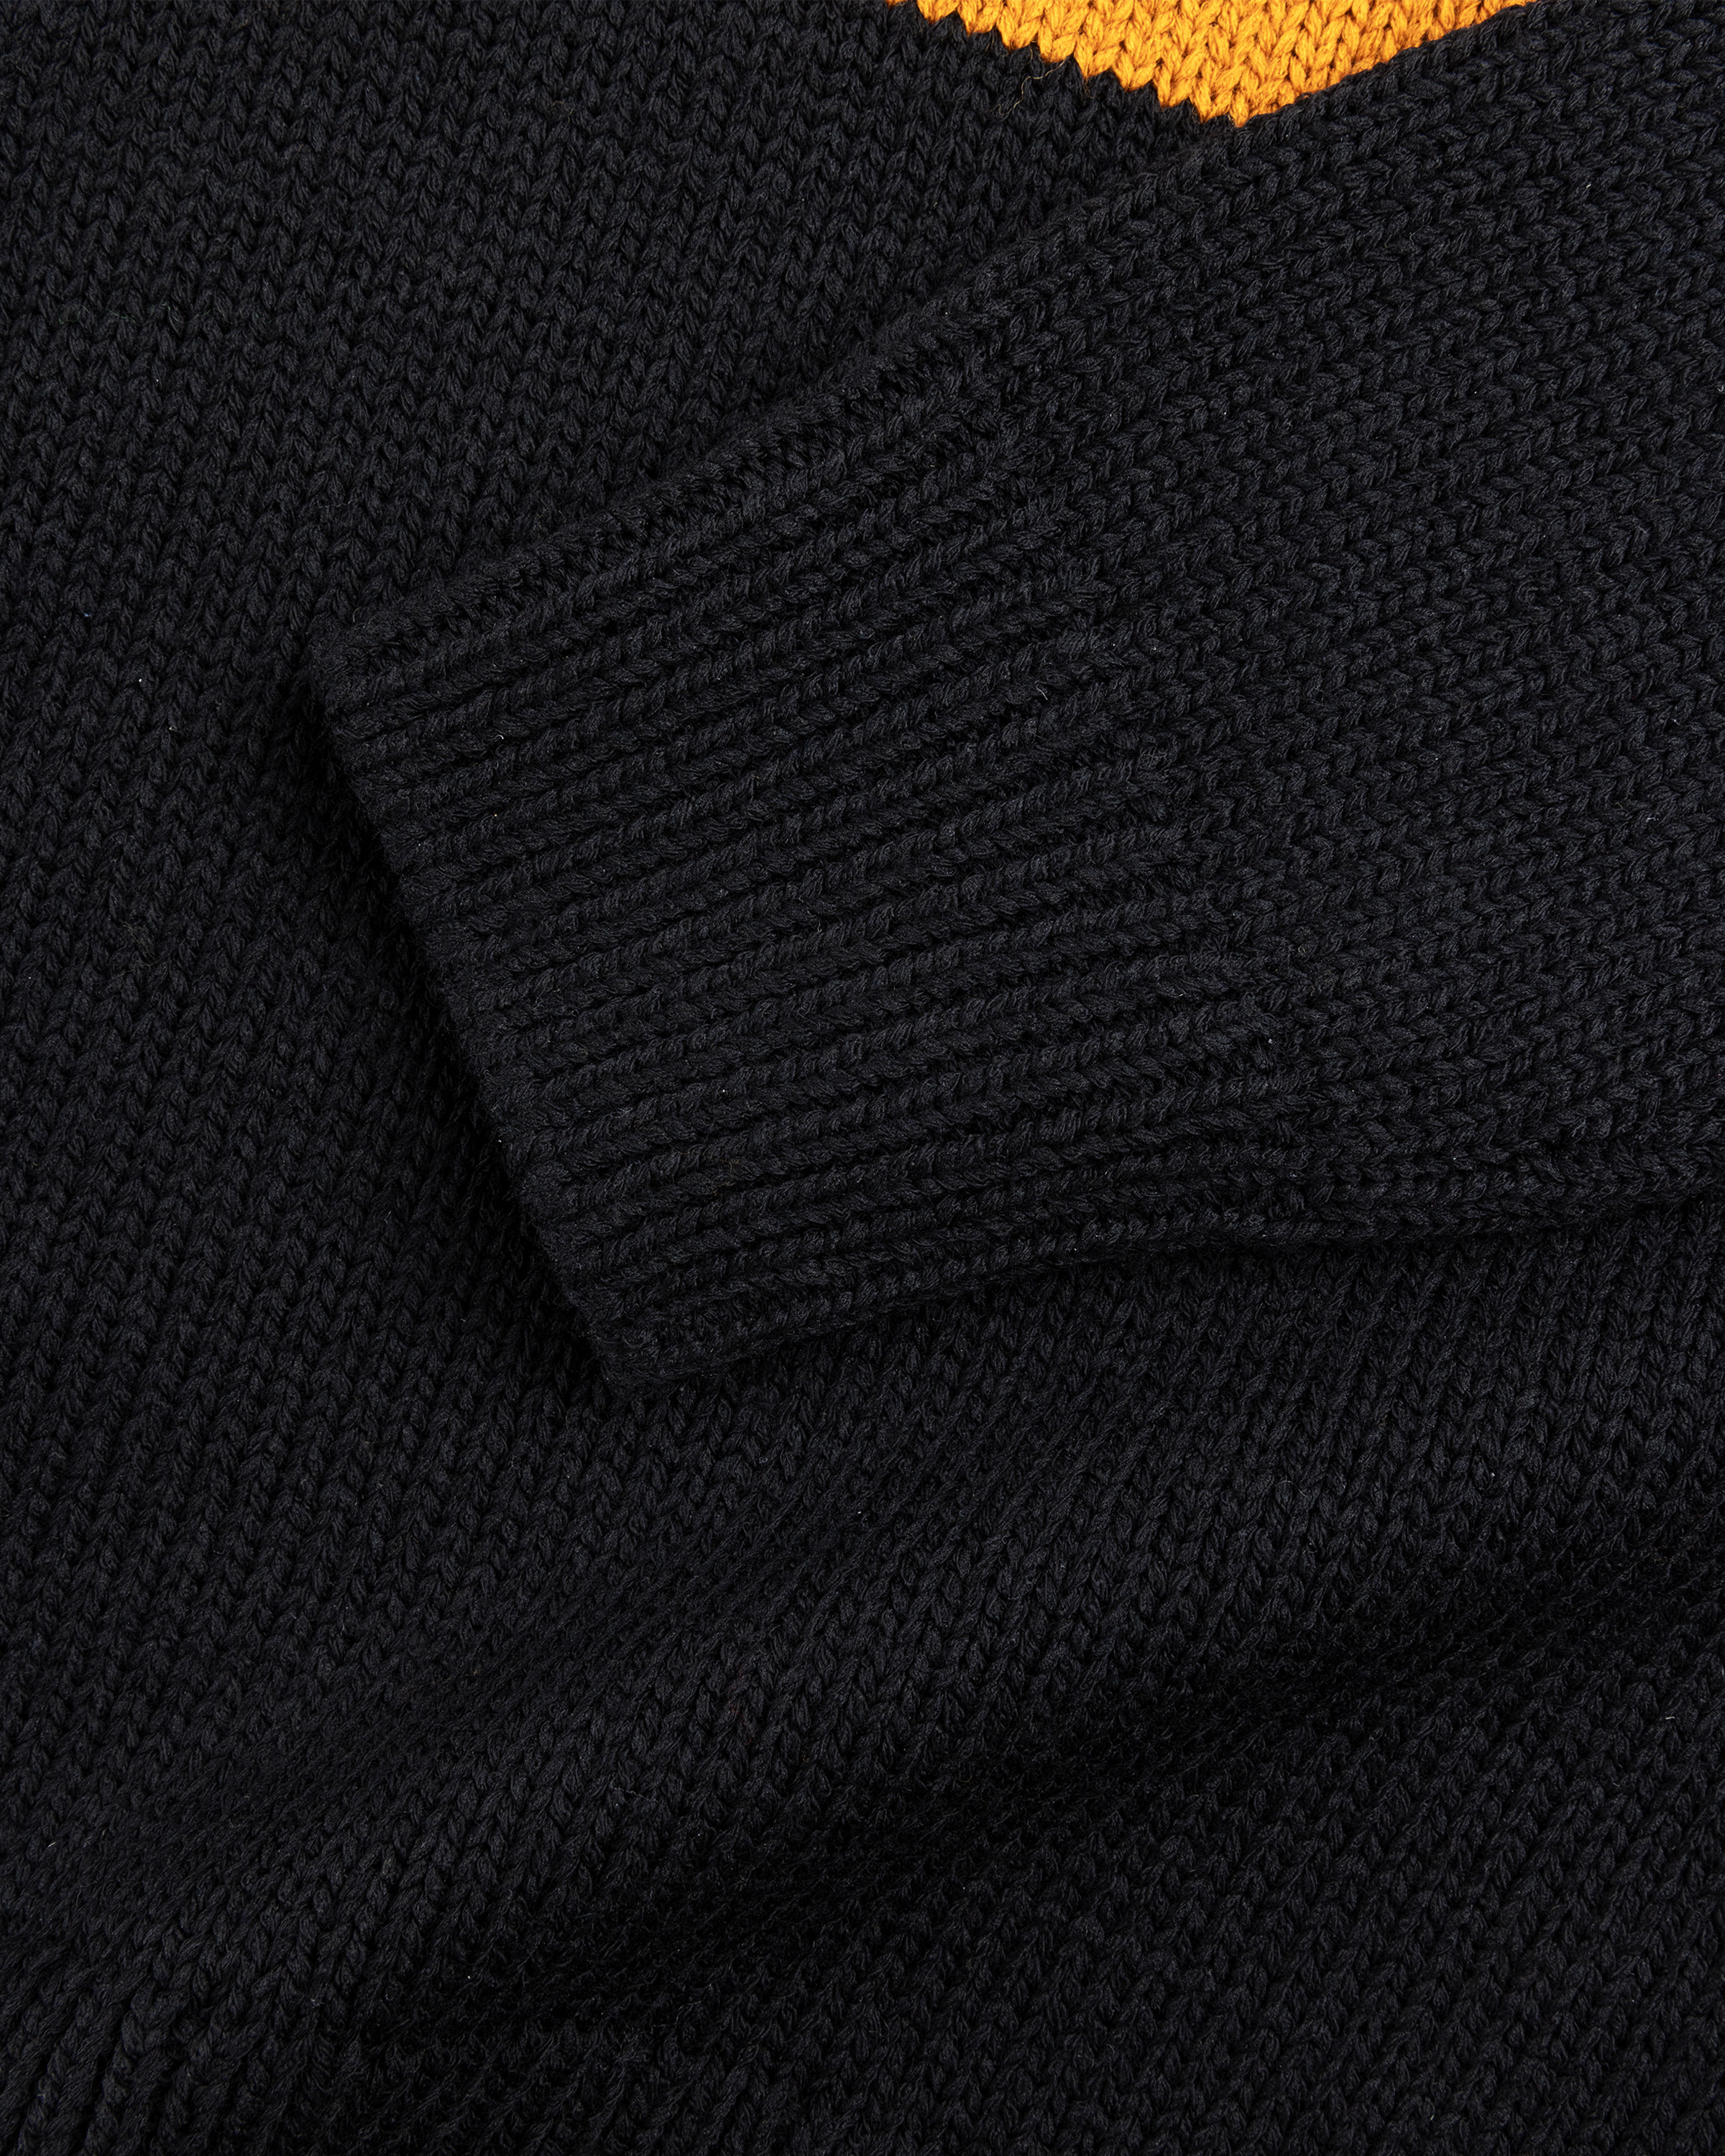 Dries van Noten – Manus Sweater Black - Knitwear - Multi - Image 6